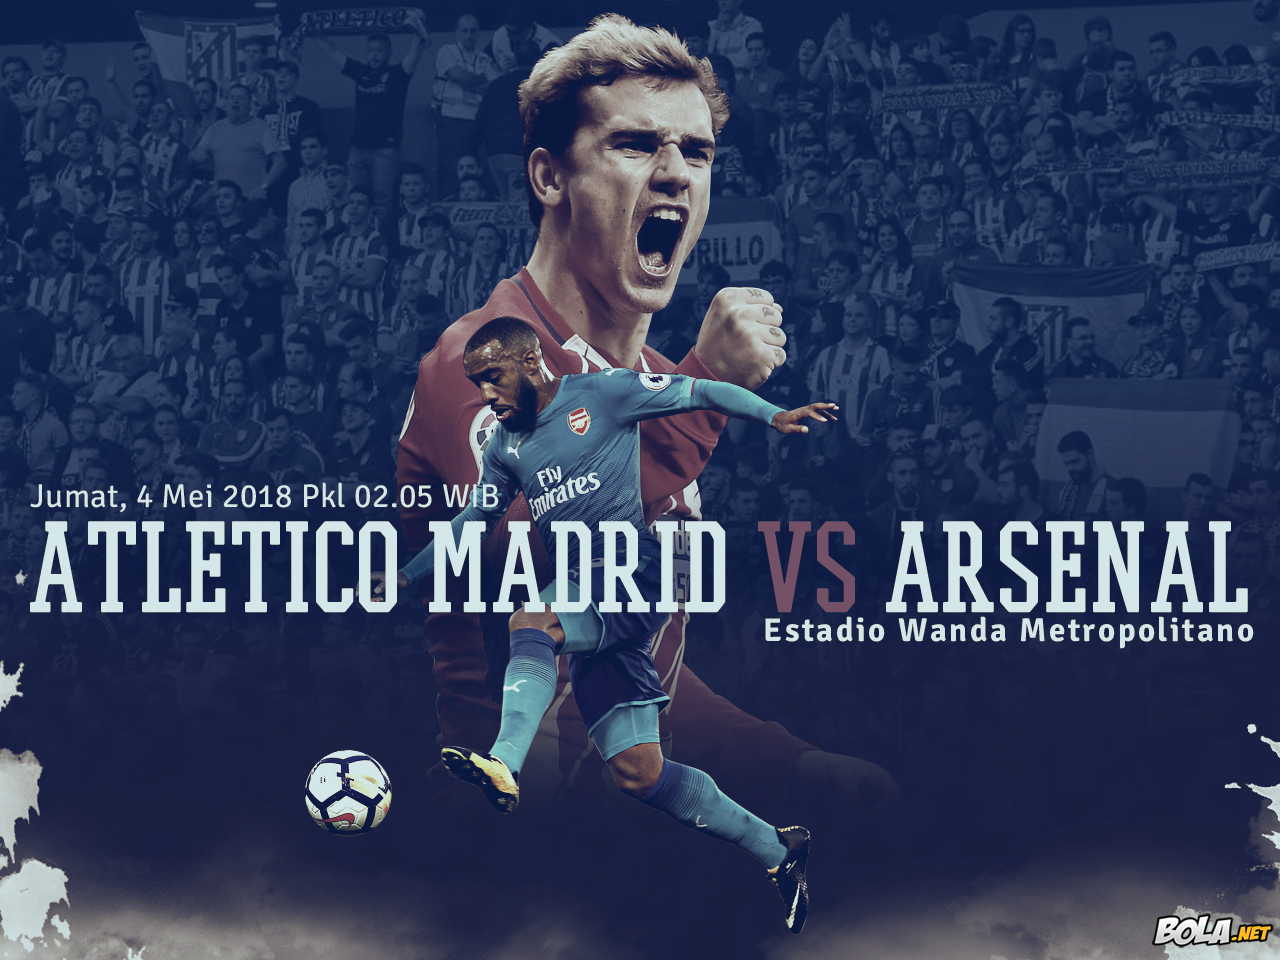 Deskripsi : Wallpaper Atletico Madrid Vs Arsenal, size: 1280x960